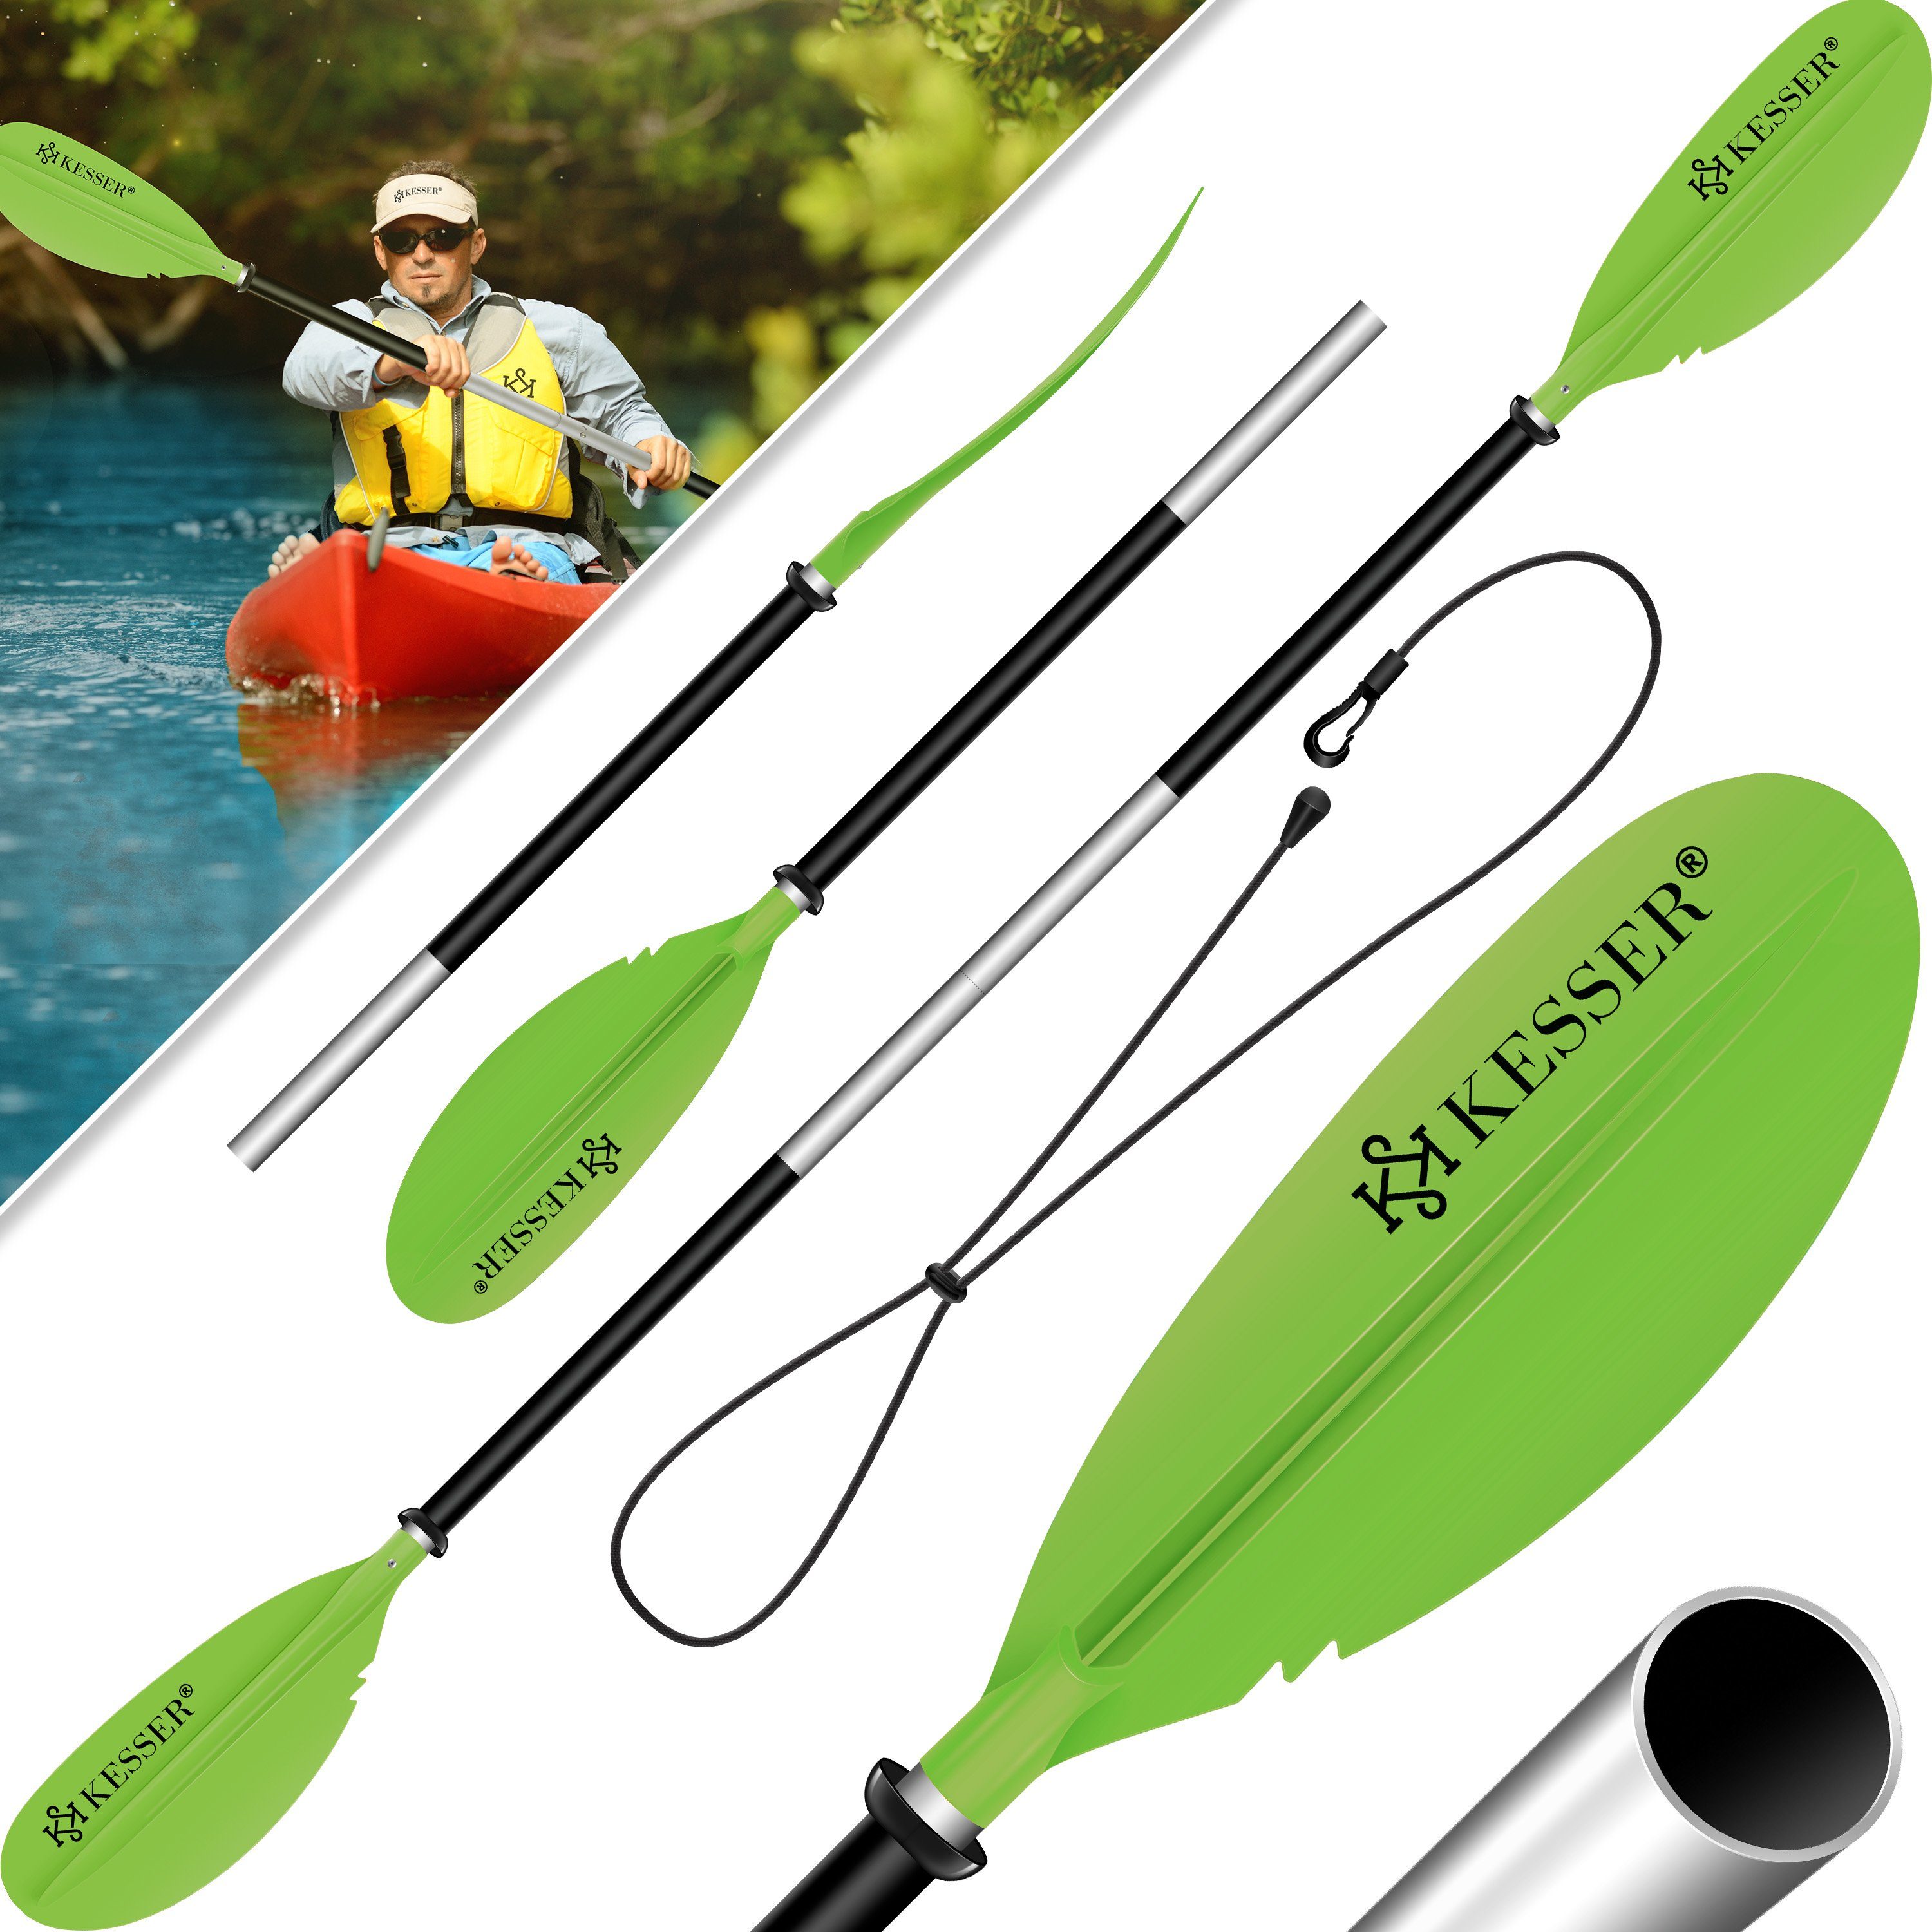 für Stand-Up SUP Kayak SUP-Paddel, Doppelpaddel 4-teilig grün Kanu Paddle KESSER